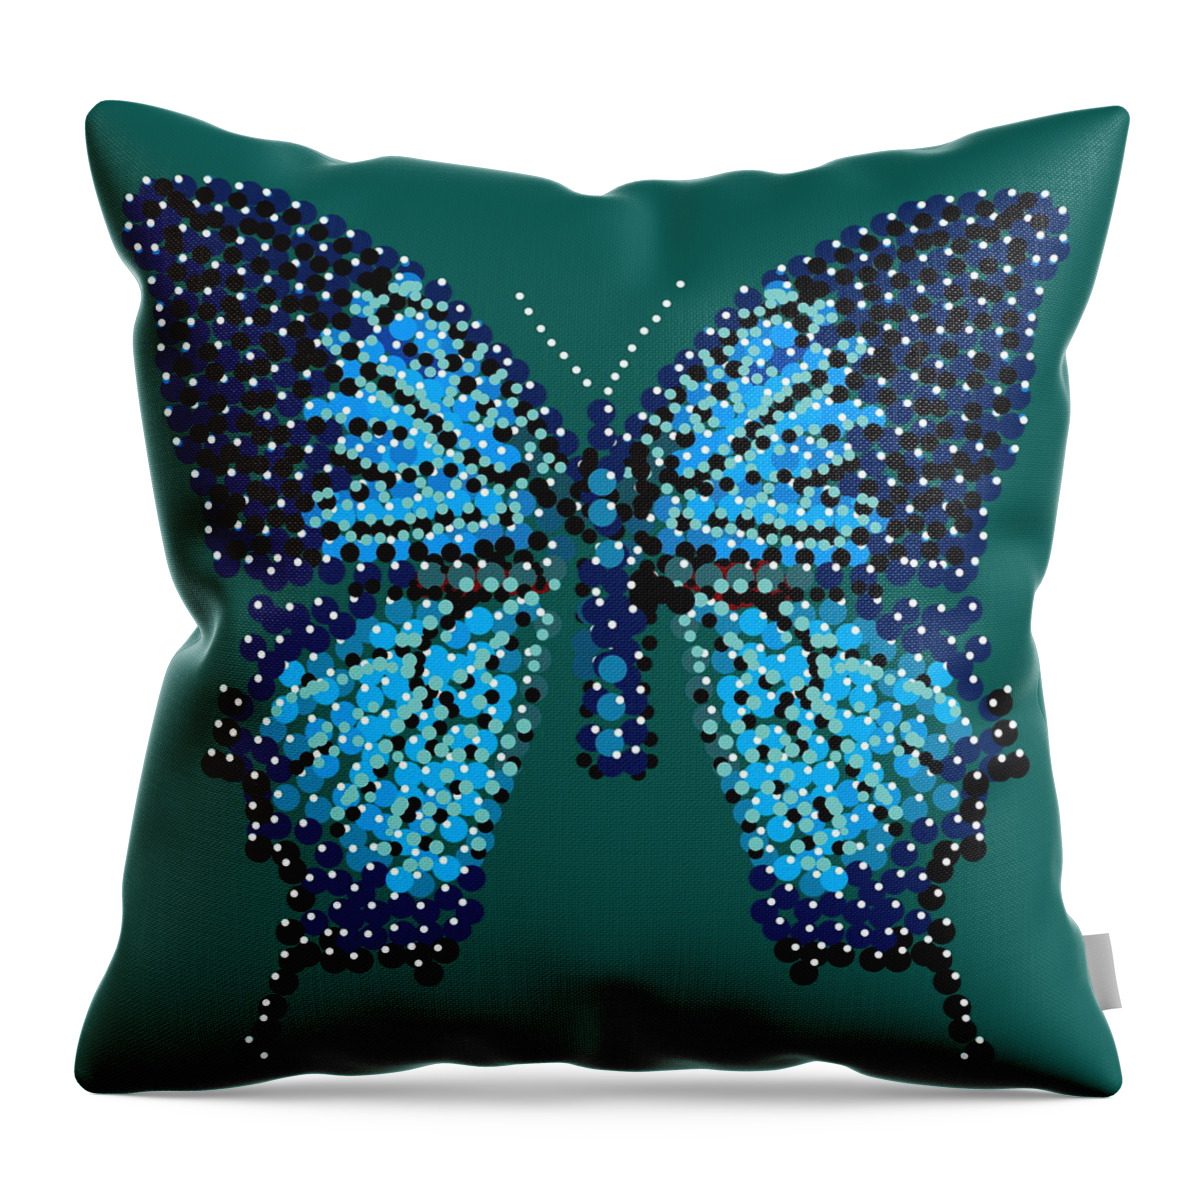  Throw Pillow featuring the digital art Blue Butterfly Green Background by R Allen Swezey